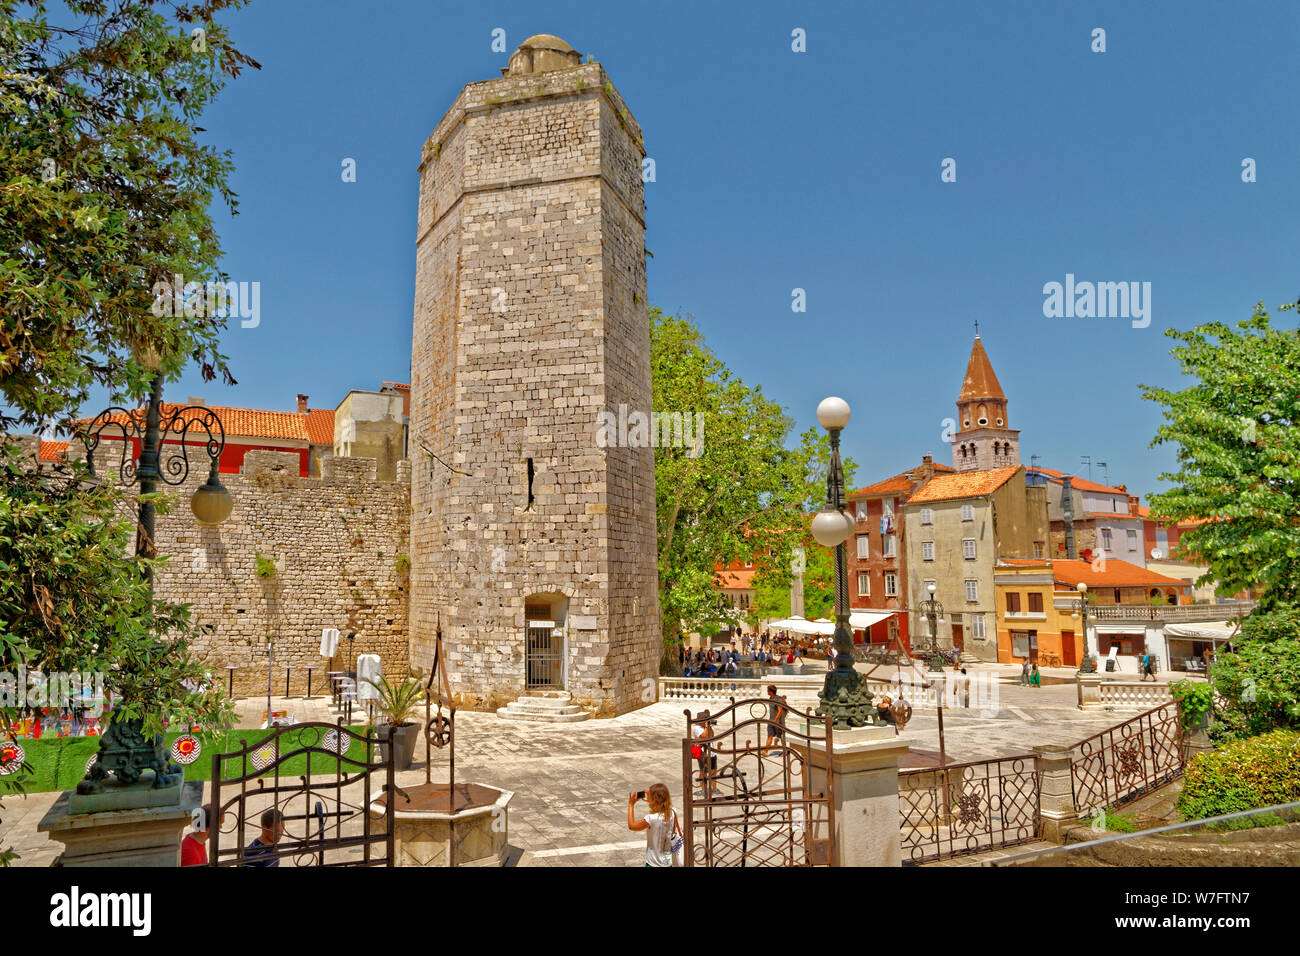 5 Wells Square at Zadar Old town, Croatia. Stock Photo